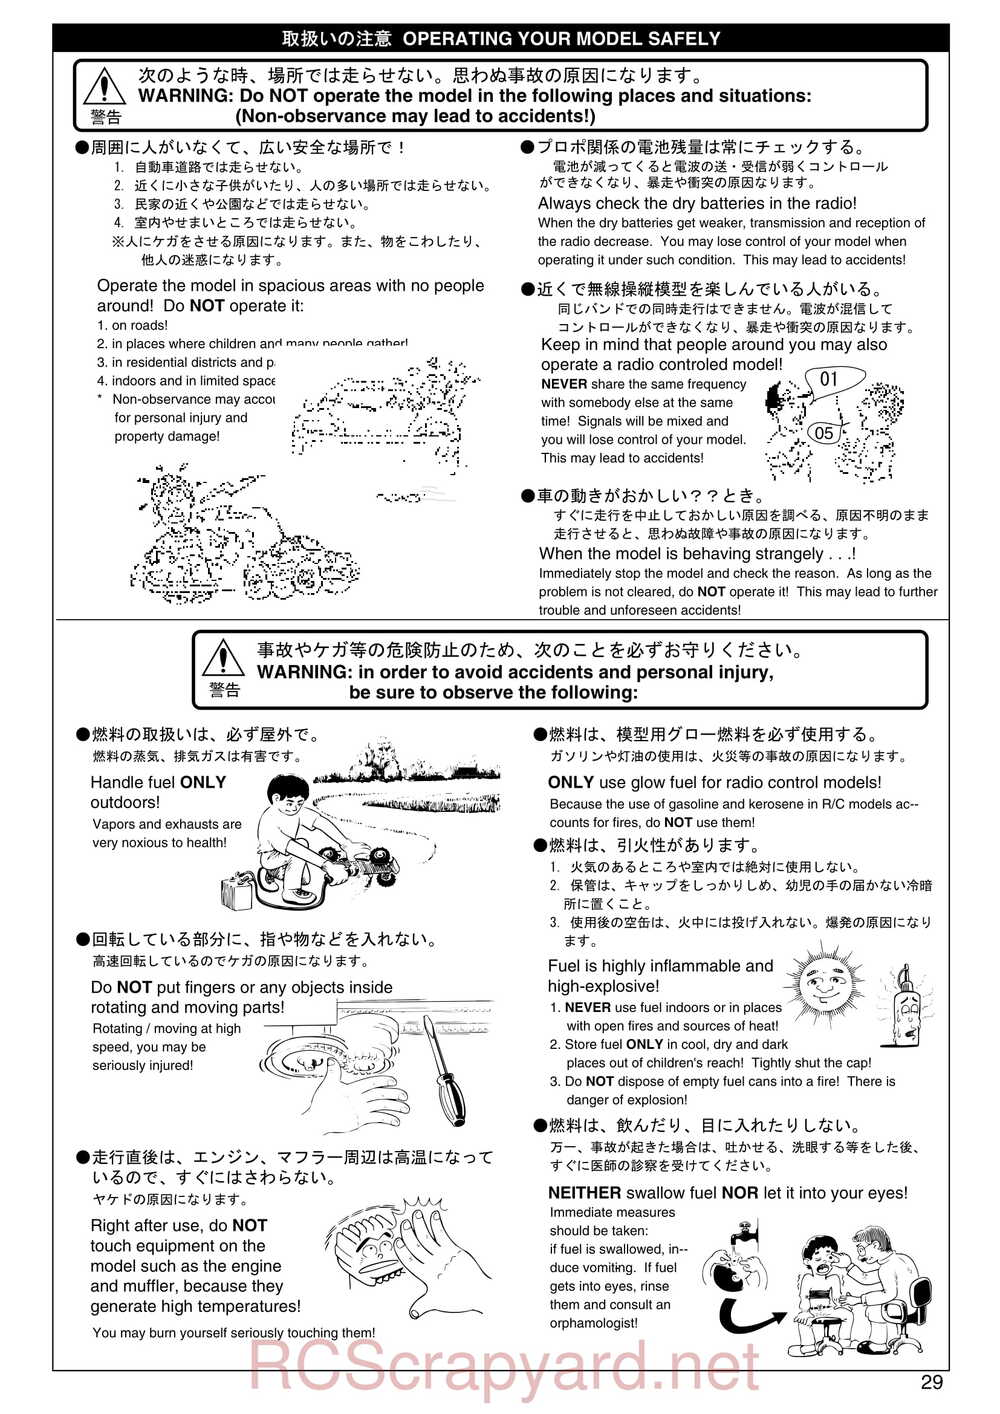 Kyosho - 31191 - Inferno-MP-7-5 Yuichi - Manual - Page 29